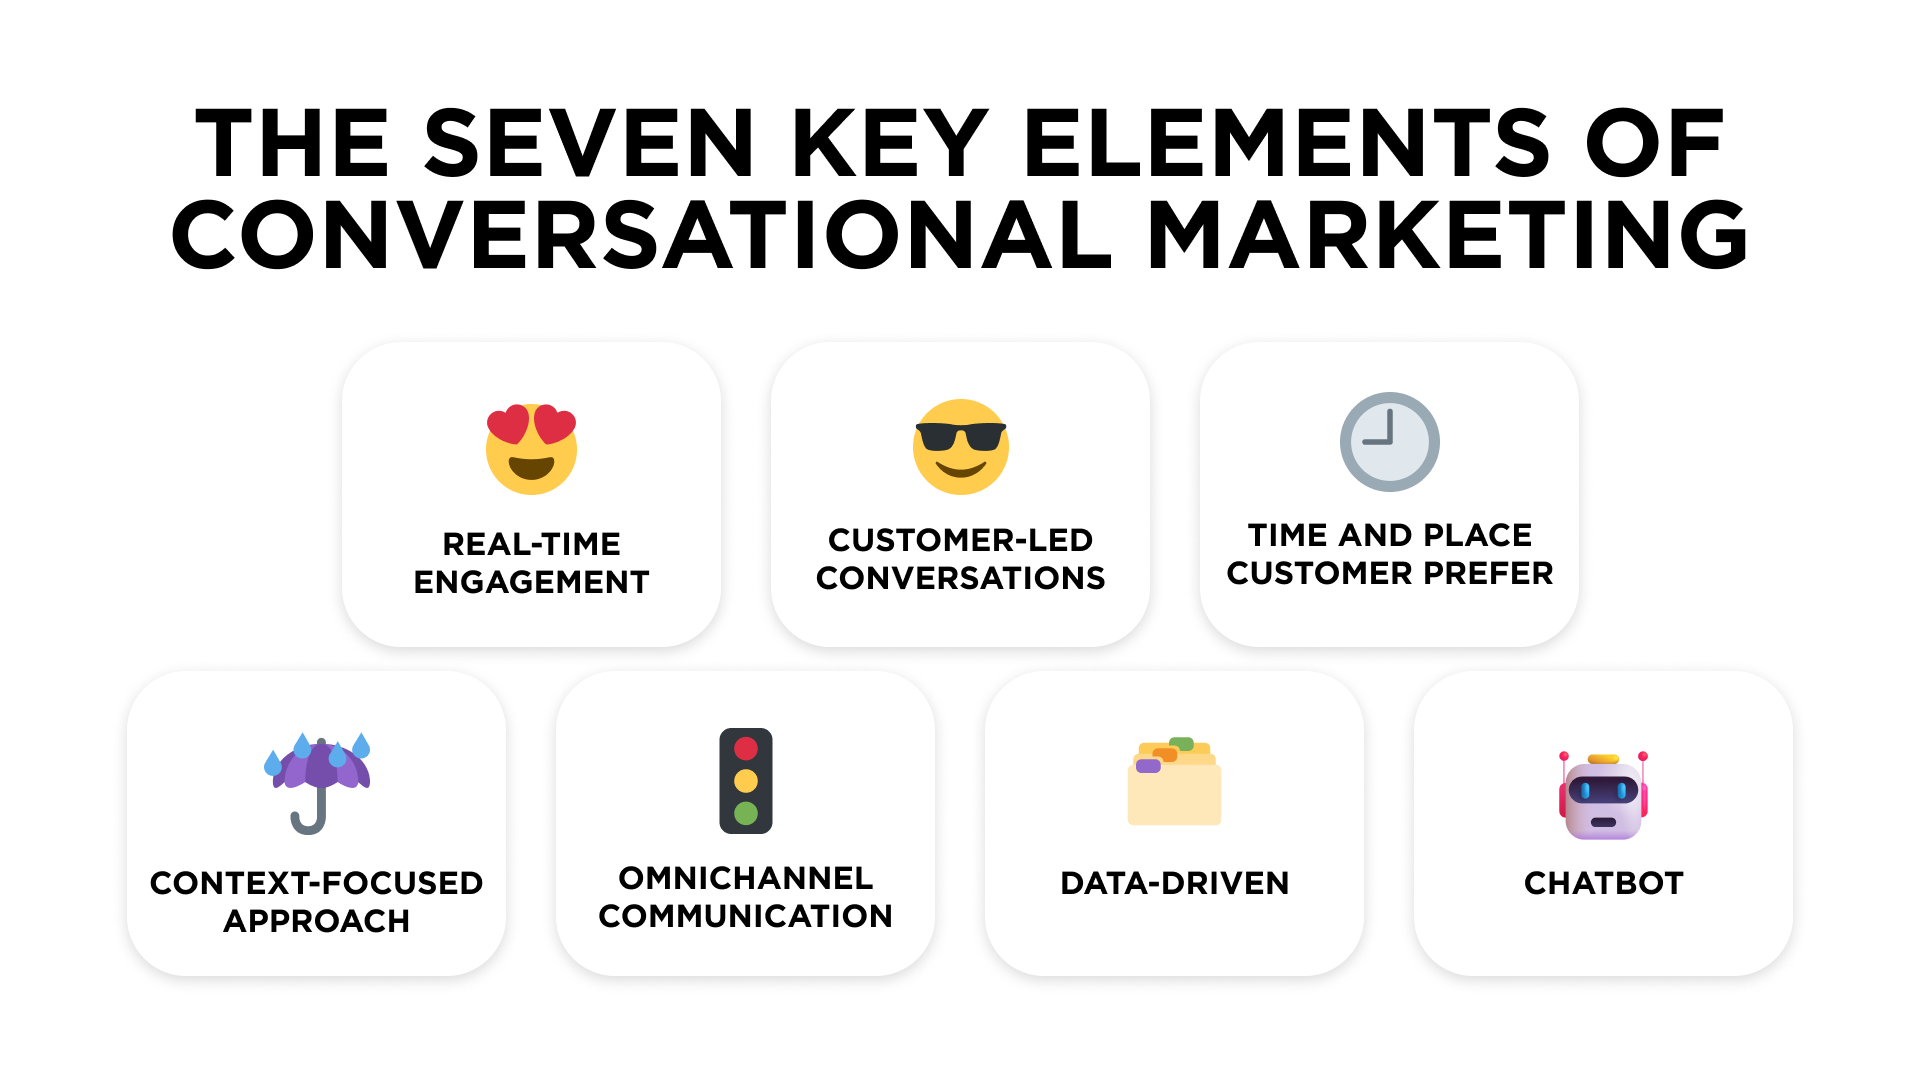 The key elements of conversational marketing